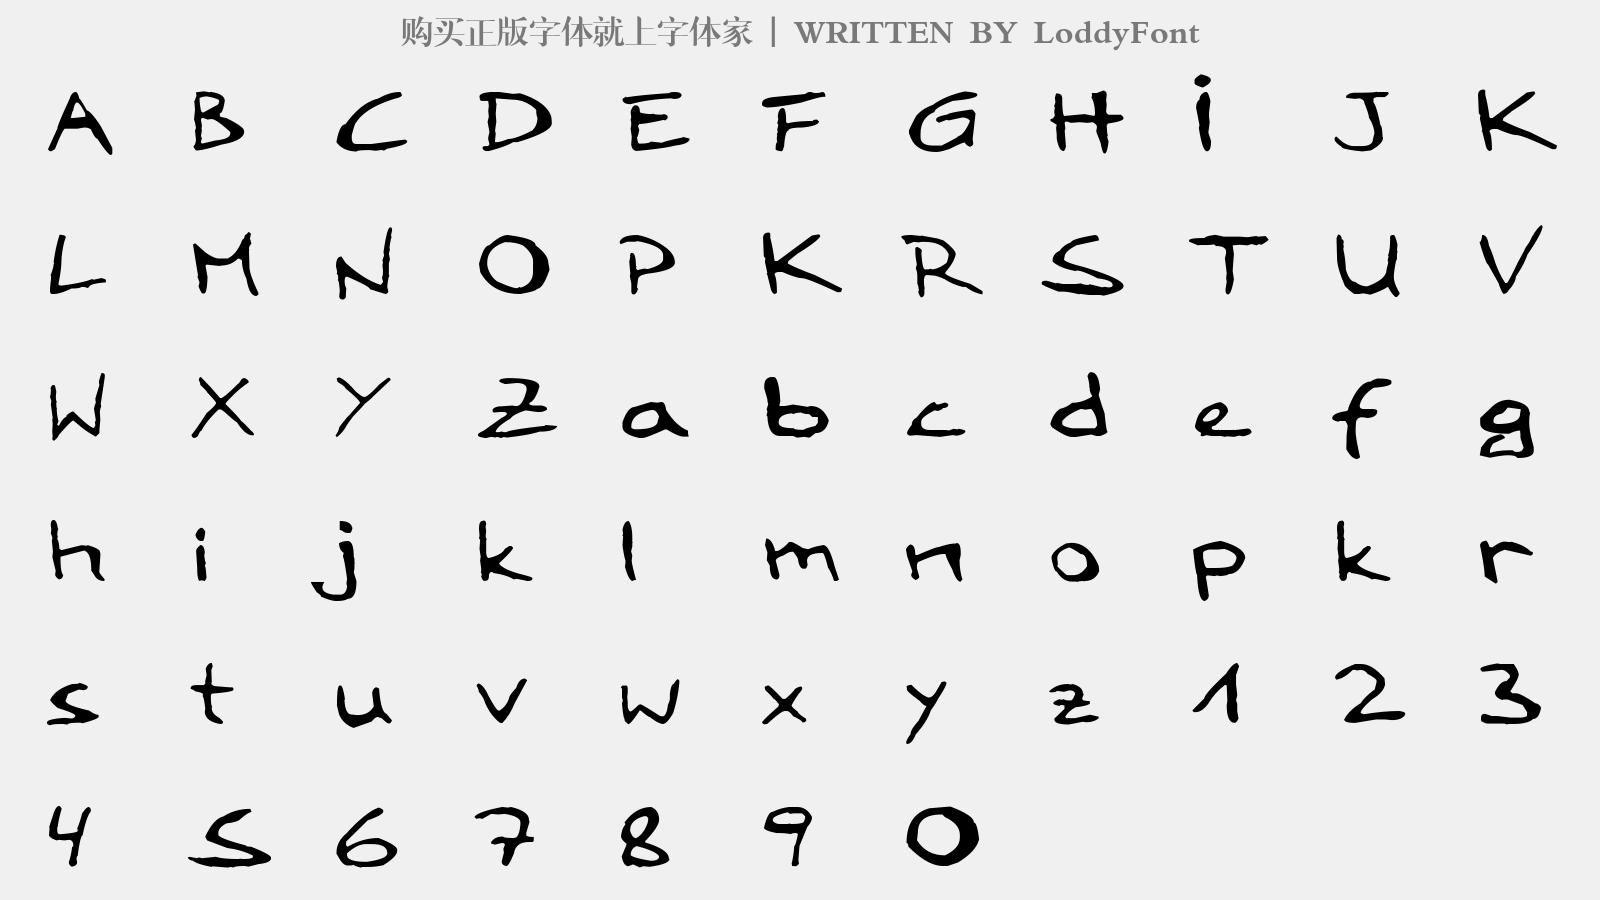 LoddyFont - 大写字母/小写字母/数字